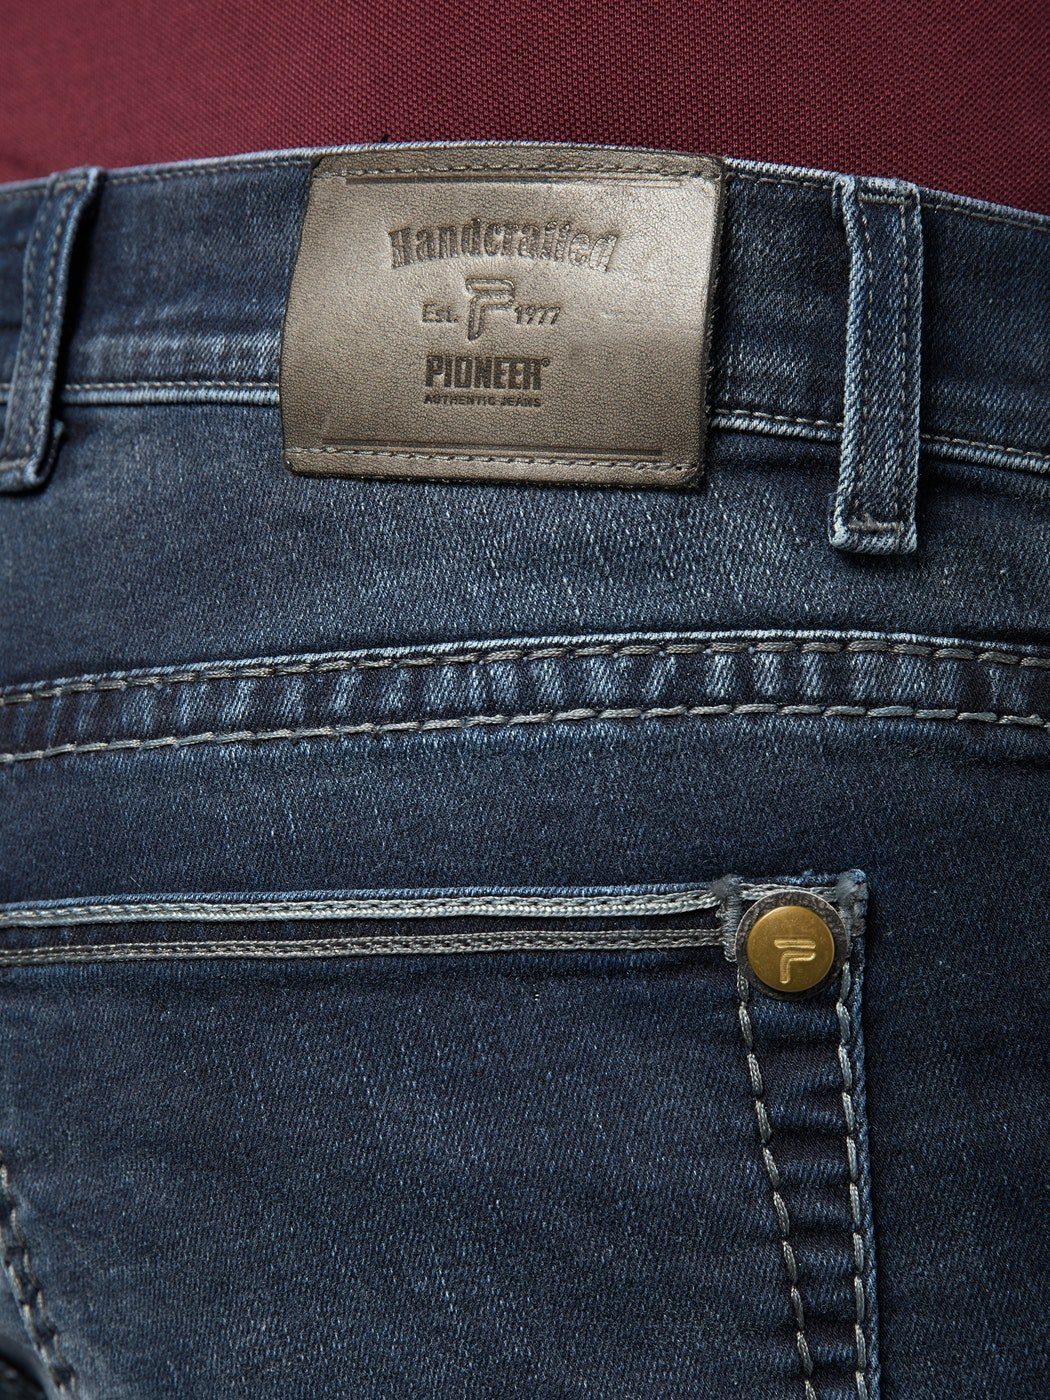 Jeans PIONEER RANDO Pioneer 1654 used 9740.475 dark MEGAFLEX Authentic 5-Pocket-Jeans